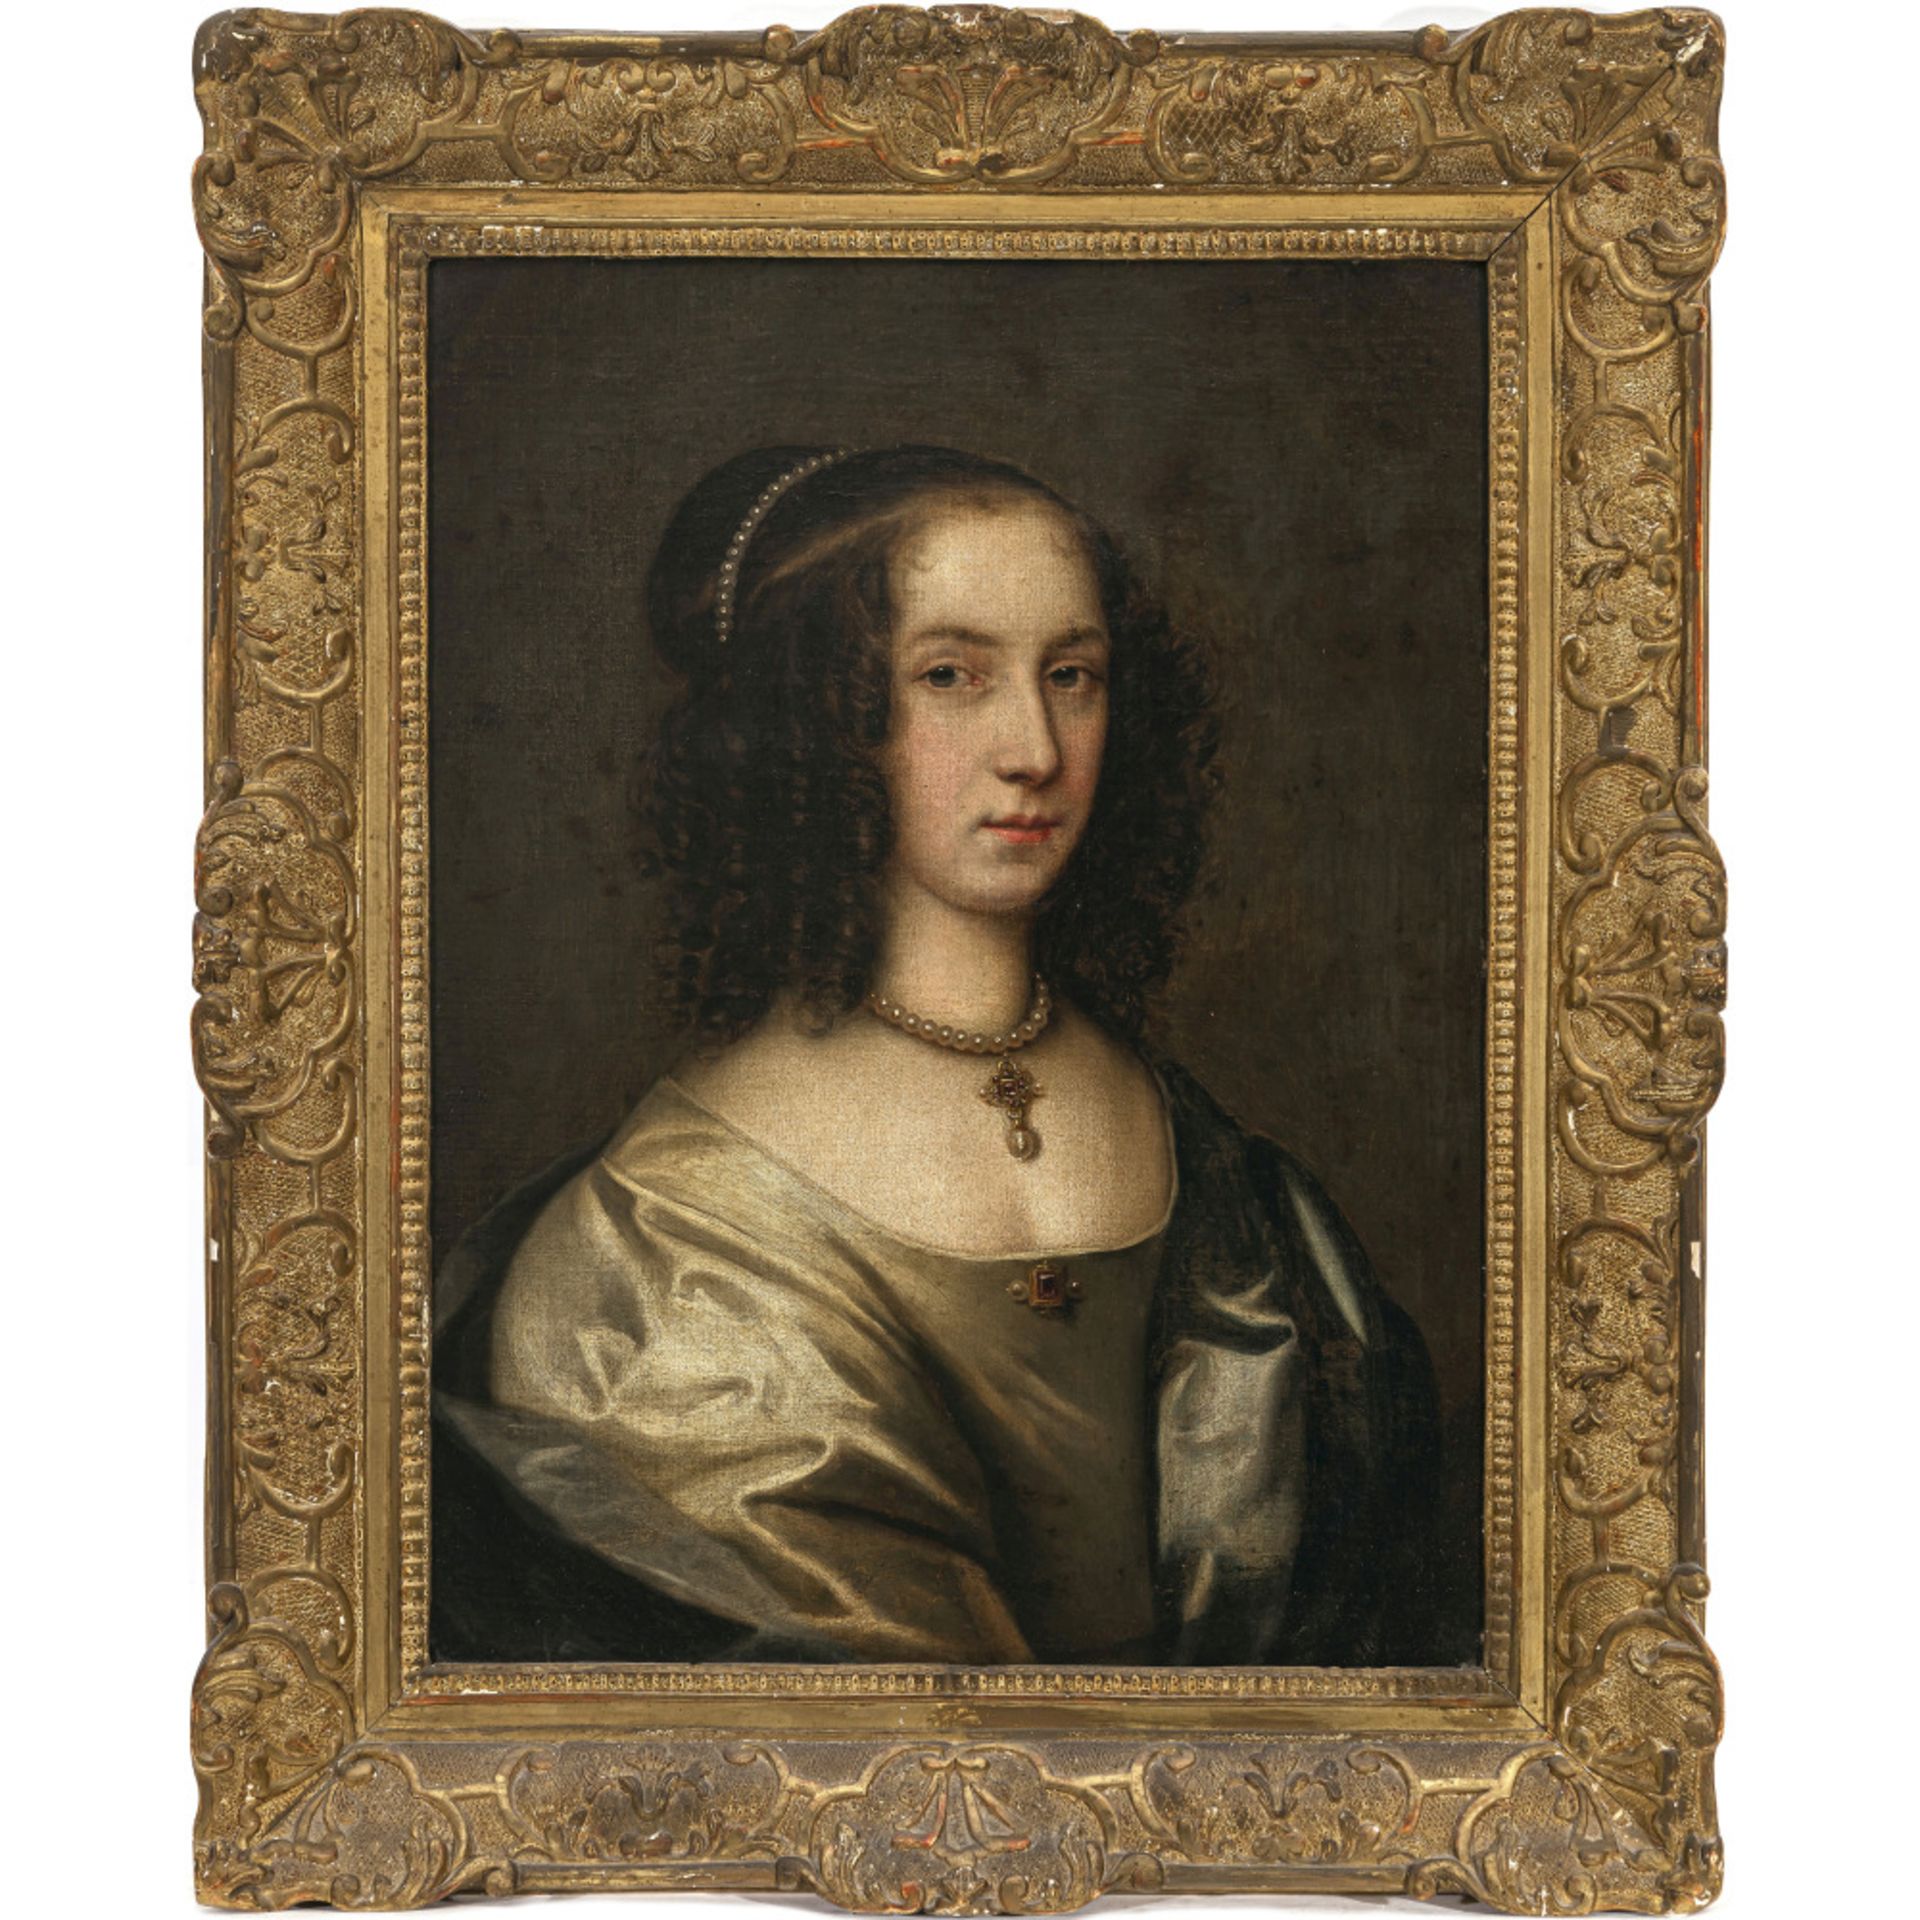 Niederlande (Utrecht?) 17th century - Portrait of a lady - Image 2 of 2